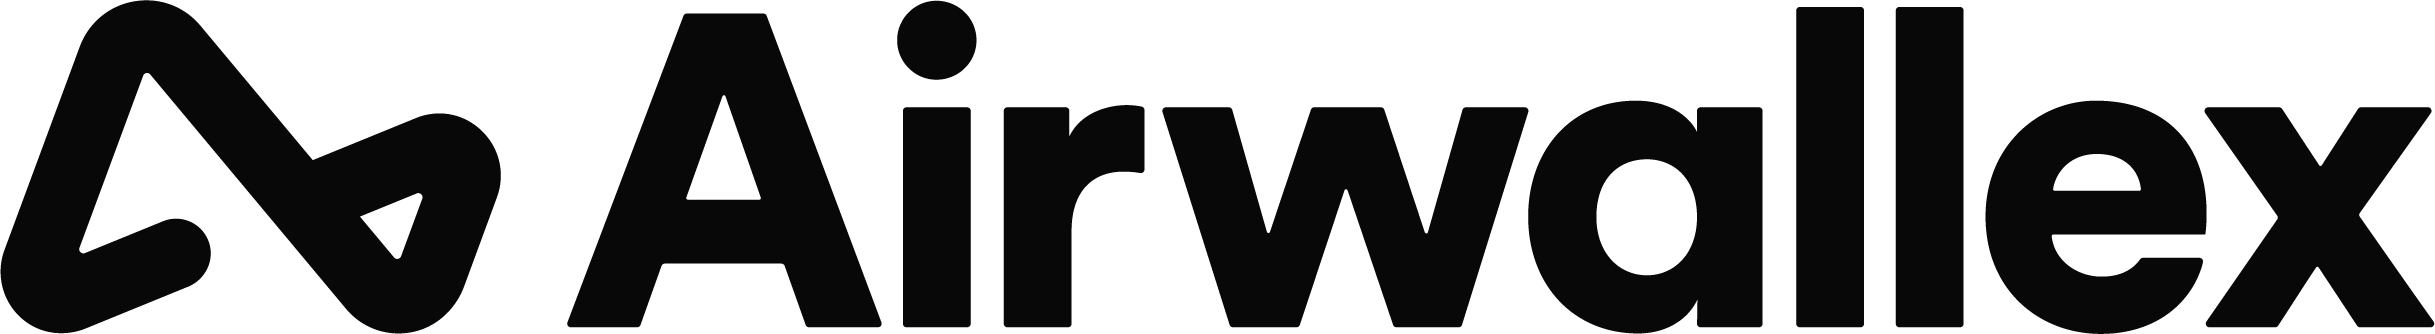 Airwallex Logo - Mono Black